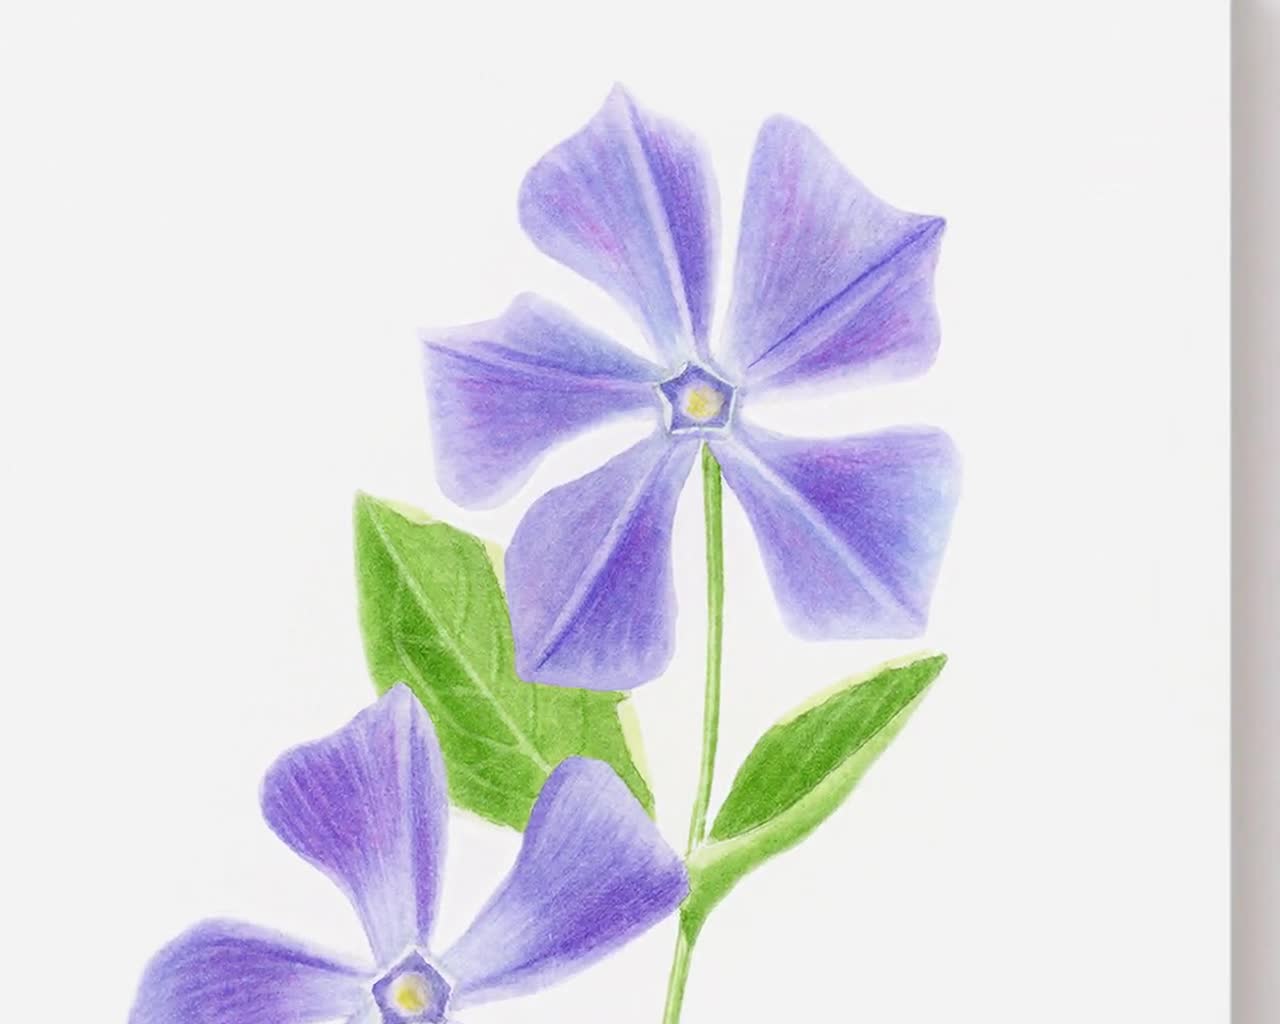 Madagascar Periwinkle Flower On White Background Stock Illustration -  Download Image Now - iStock